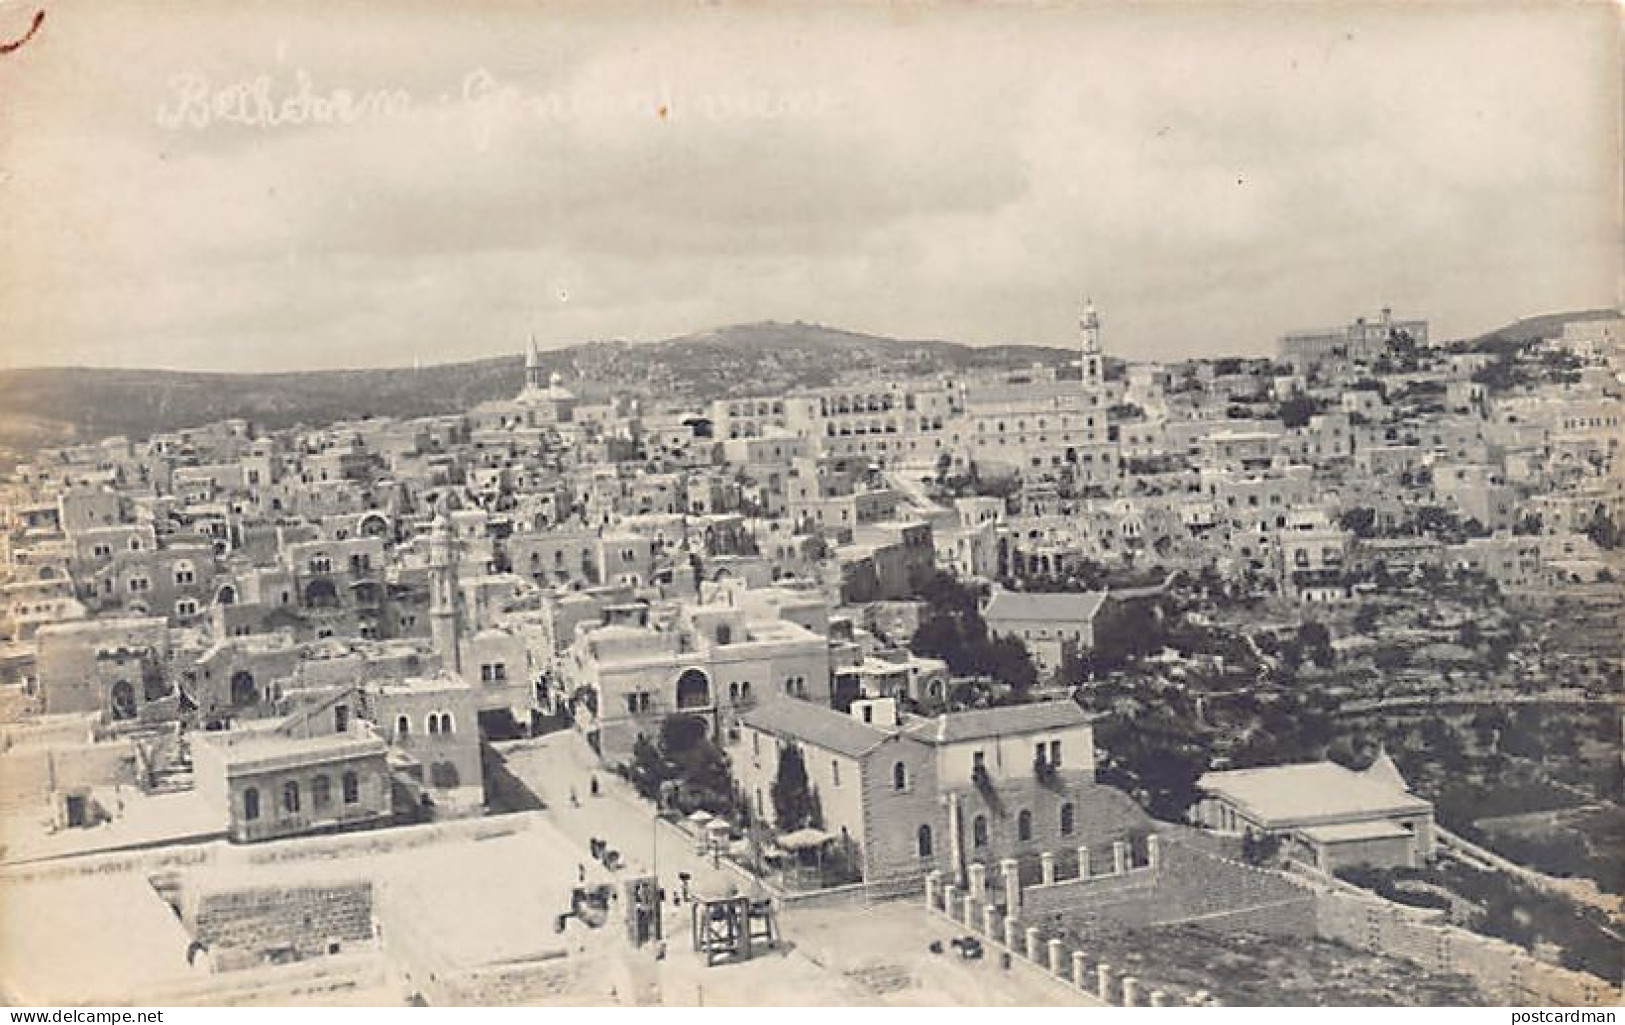 Palestine - BETHLEHEM - General View - REAL PHOTO - Publ. Unknwon  - Palestina